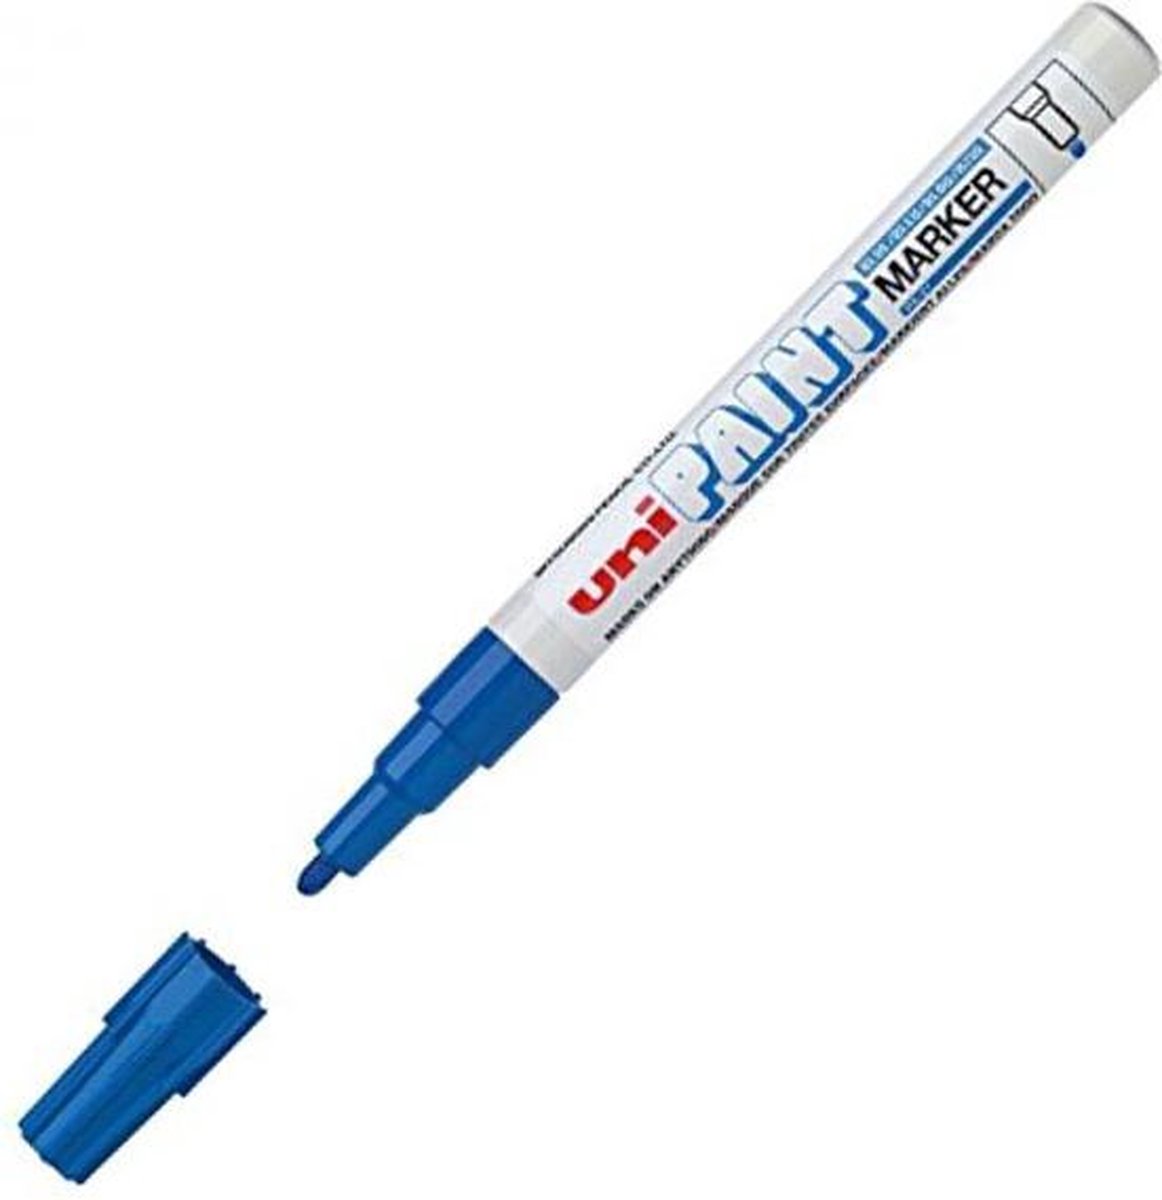 Uni Paint PX-21 Paint Marker - Donkerblauwe verfstift met 0.8 - 1.2 mm punt